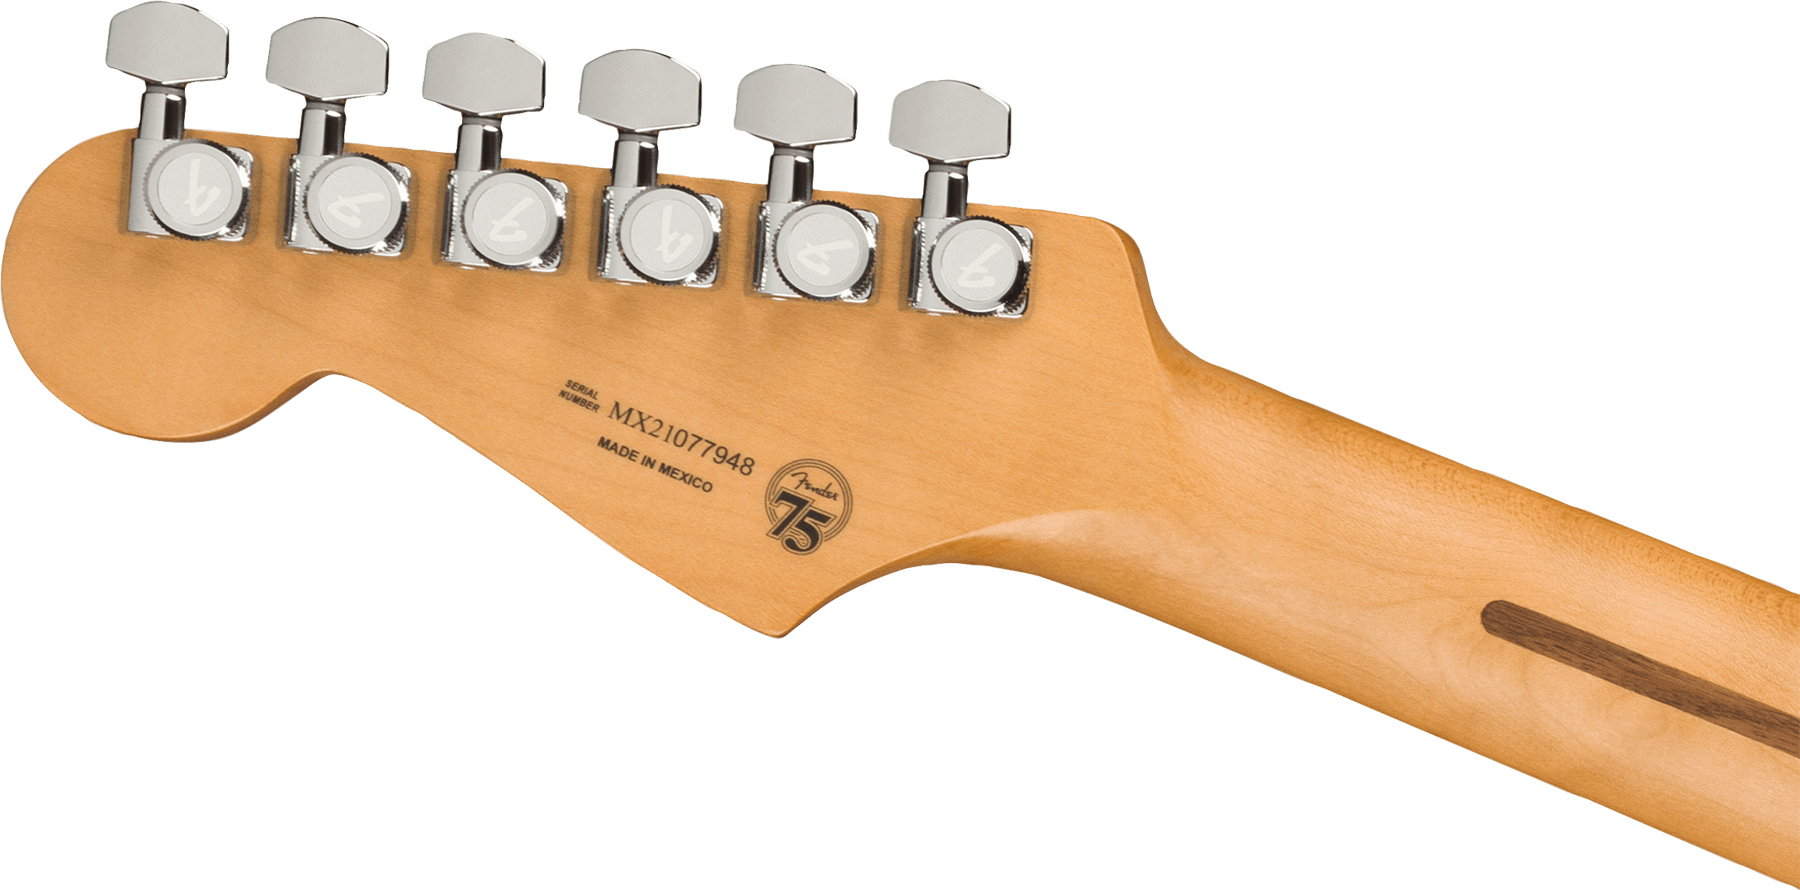 Fender Strat Player Plus Mex 3s Trem Pf - Aged Candy Apple Red - E-Gitarre in Str-Form - Variation 3